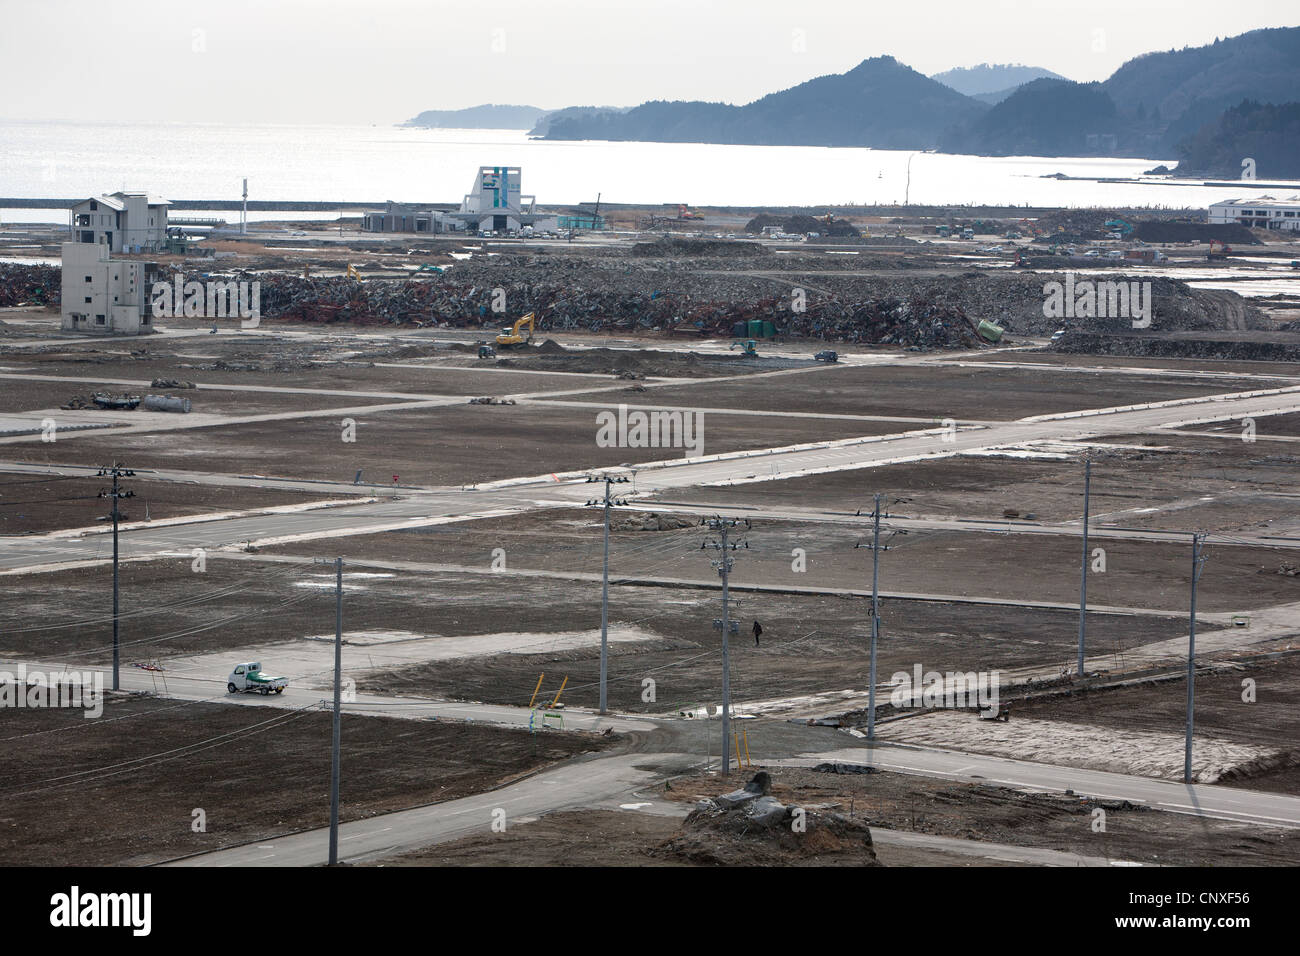 The aftermath of the March 11th 2011 tsunami in Rikuzentakata, Tohoku, Japan. Stock Photo